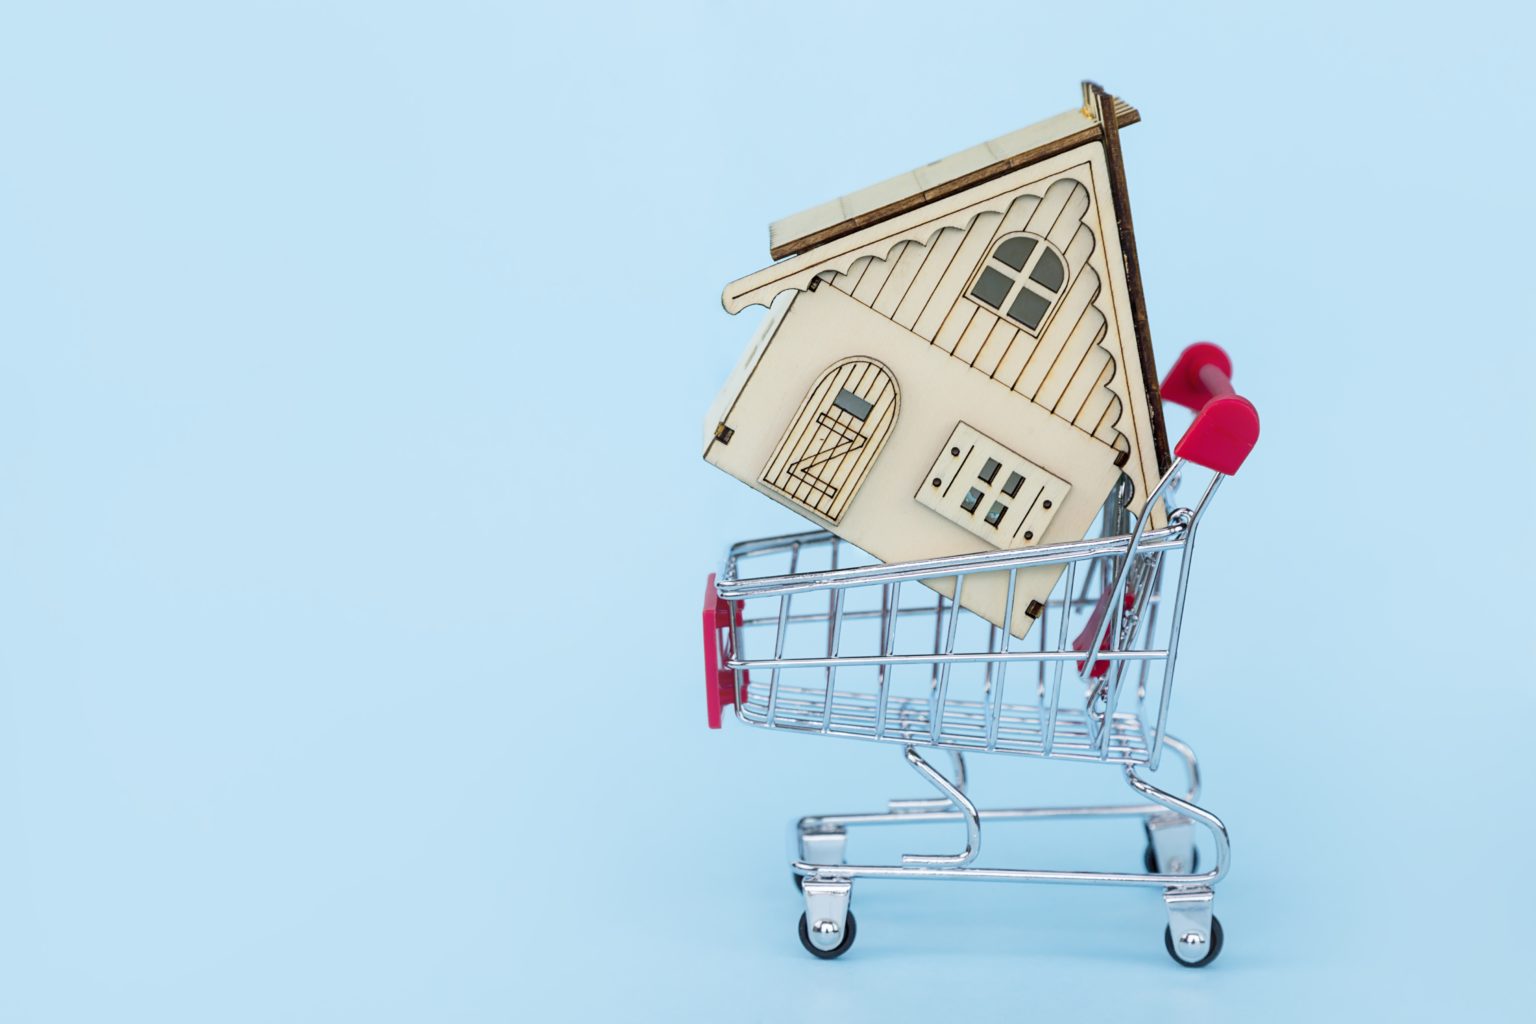 shopping-pushcart-trolly-cart-pushcart-basket-banking-mortgage-business-property-loan-concept-buy_t20_nRoOrR-1536x1024